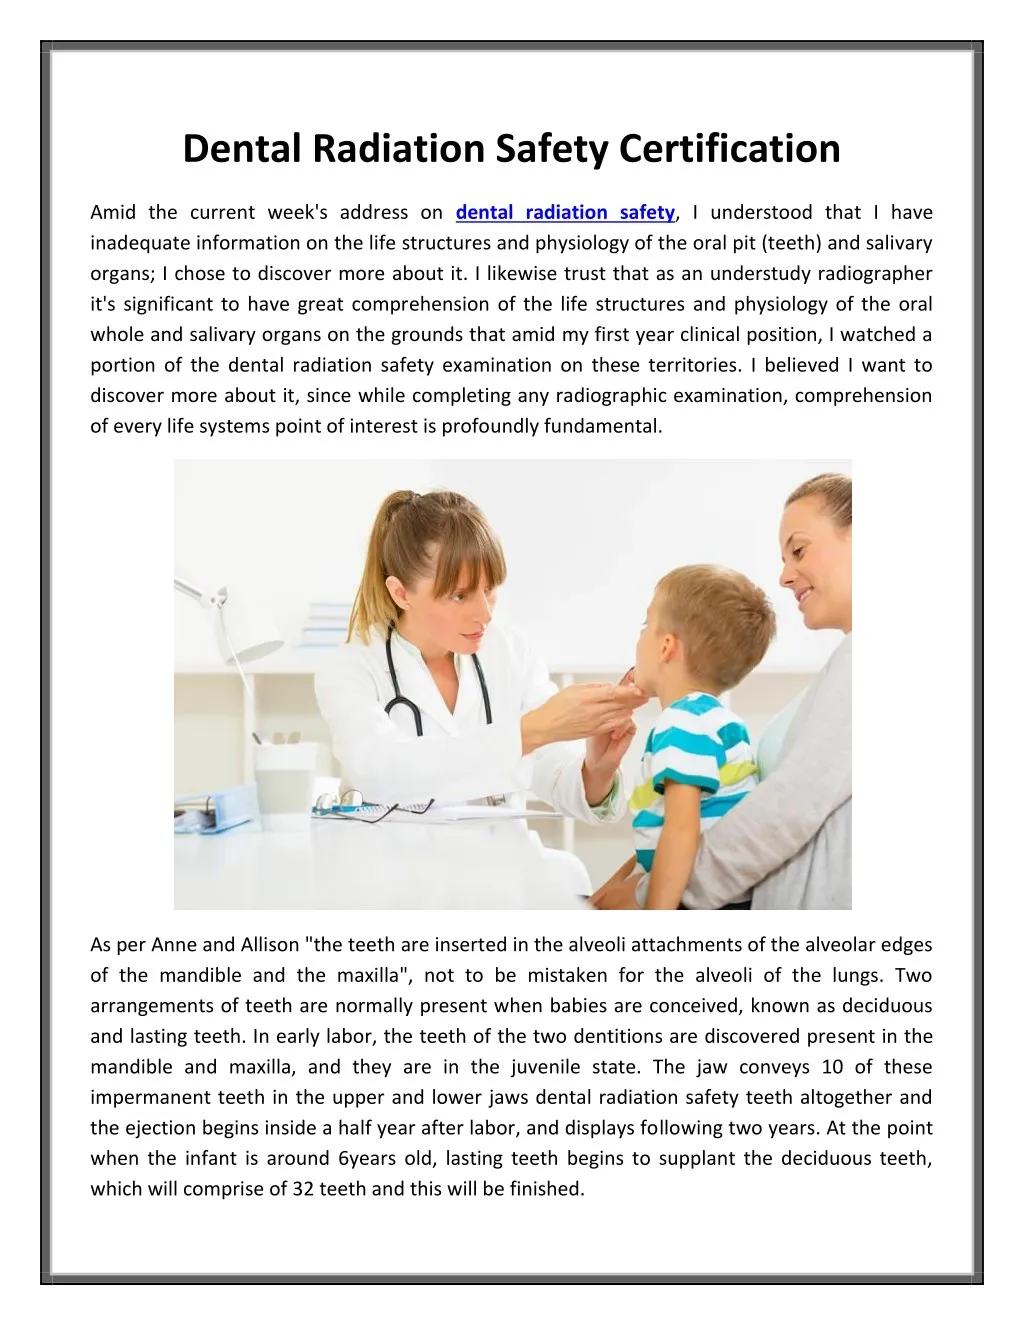 PPT Dental Radiation Safety Certification PowerPoint Presentation